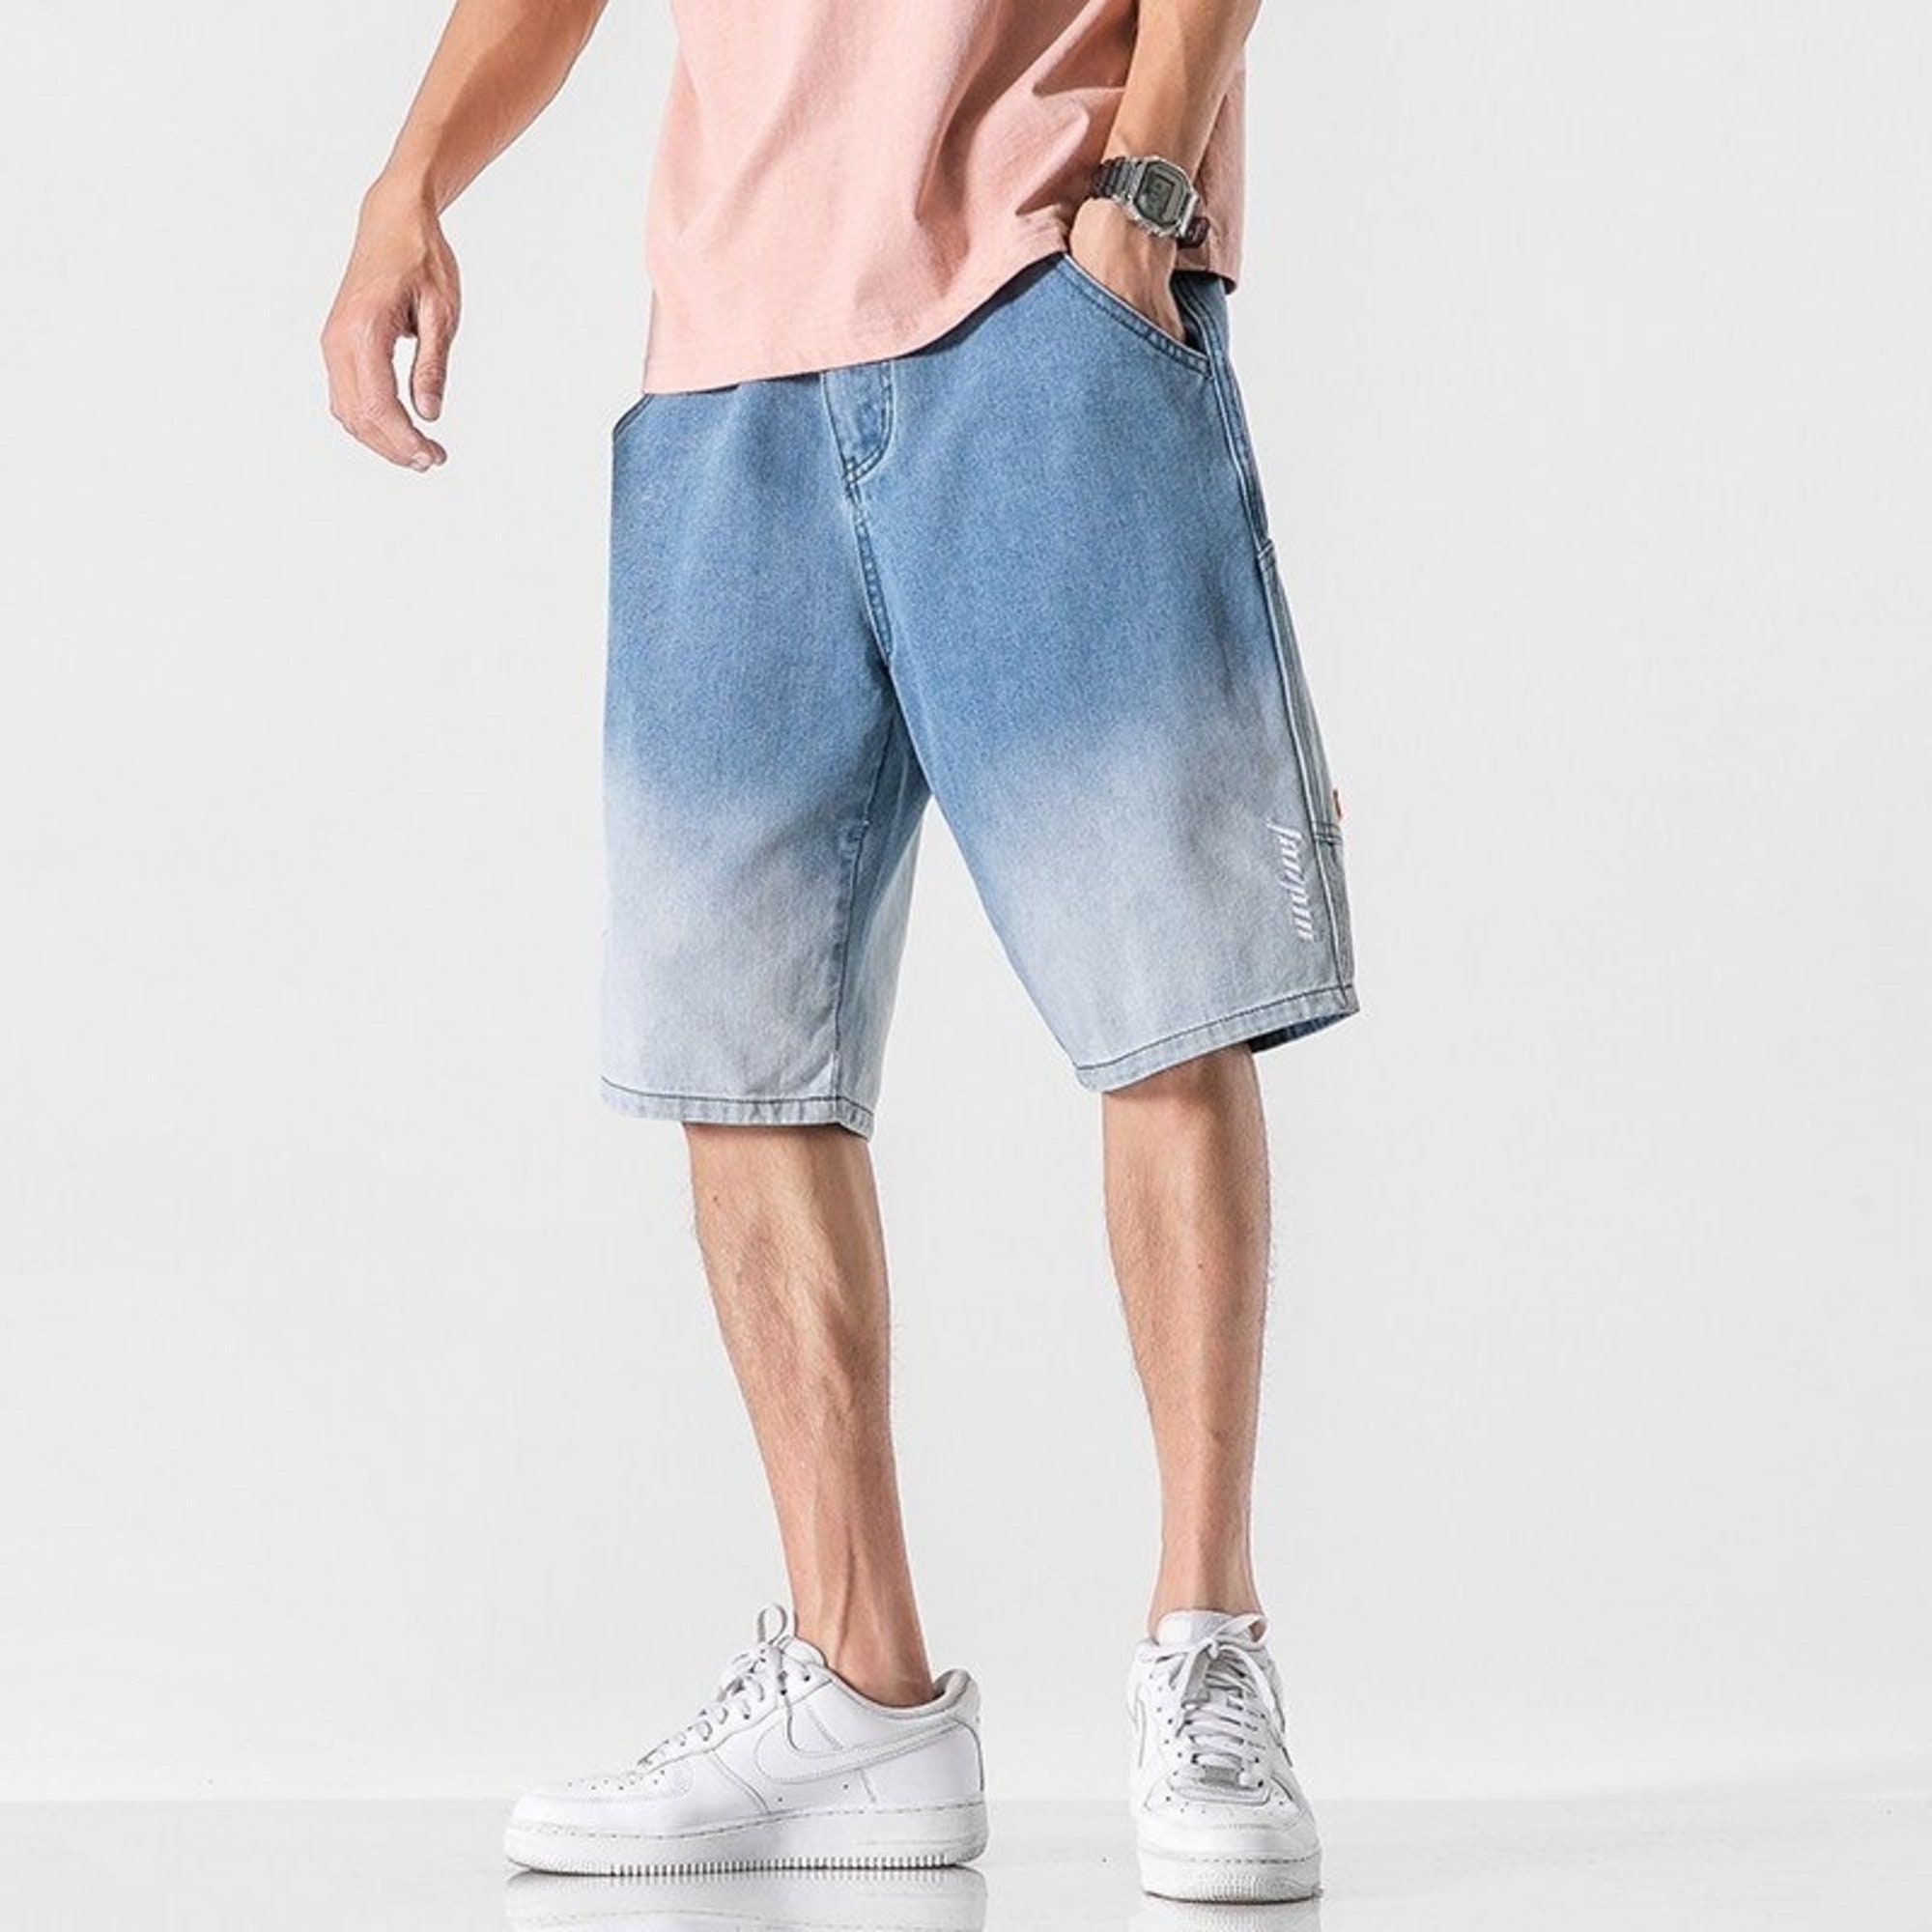 2021 New Summer Color Baggy Short Jeans Men Casual Denim | Etsy